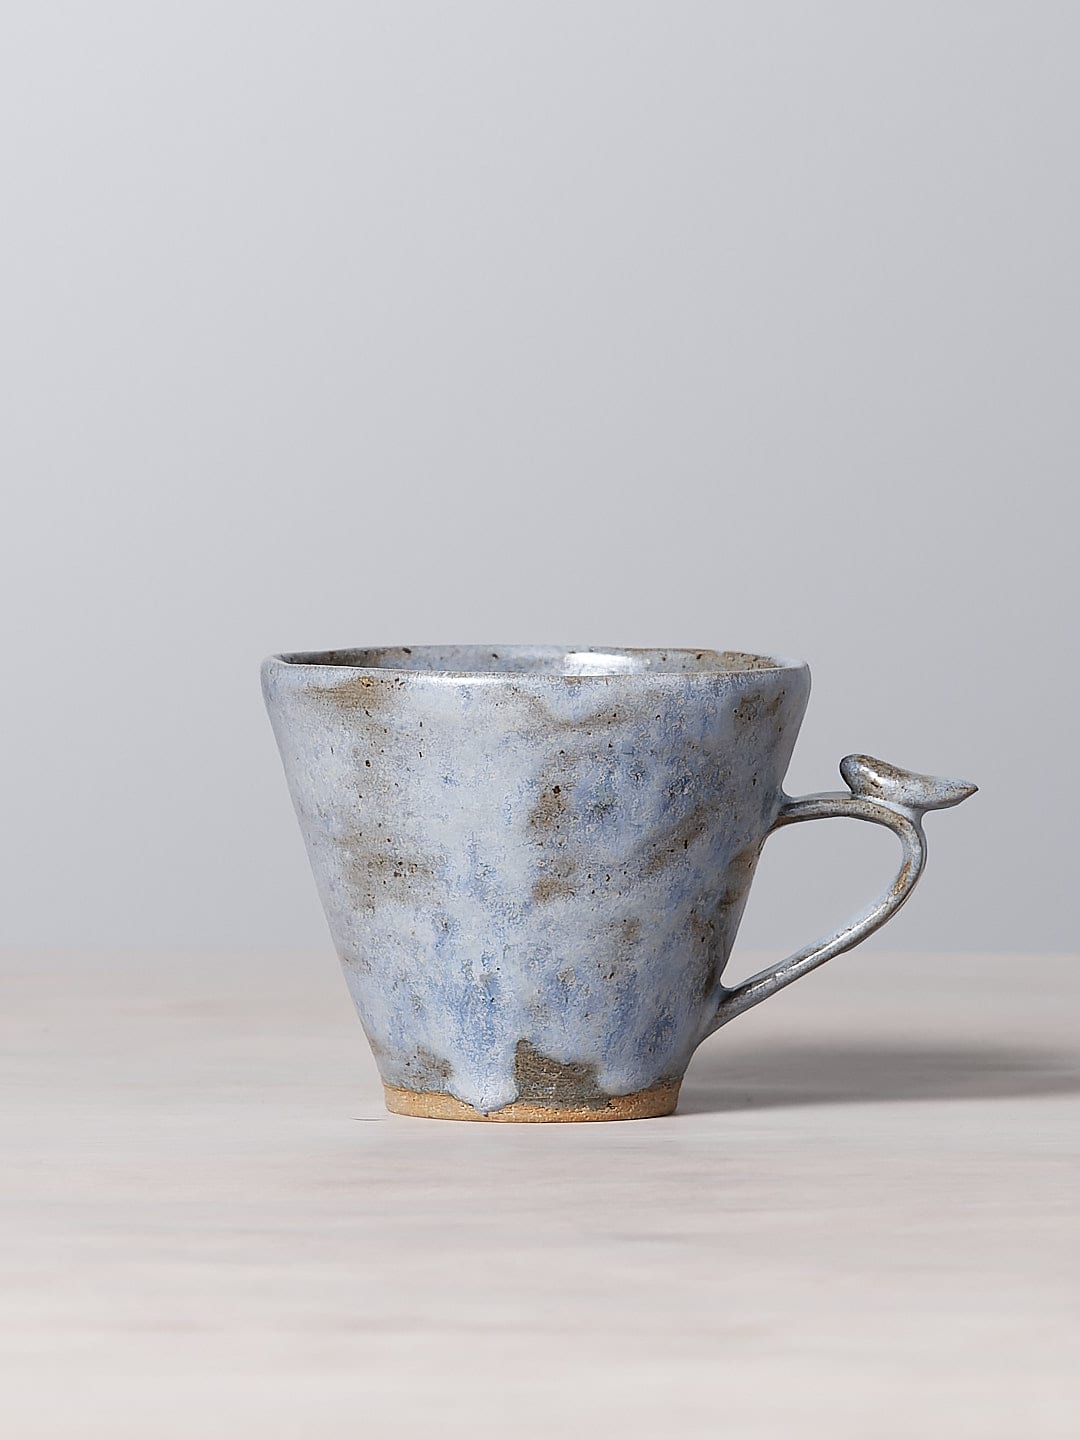 A Bird Handle Mug – Kōkako from Jino Ceramic Studio, sitting on a table.